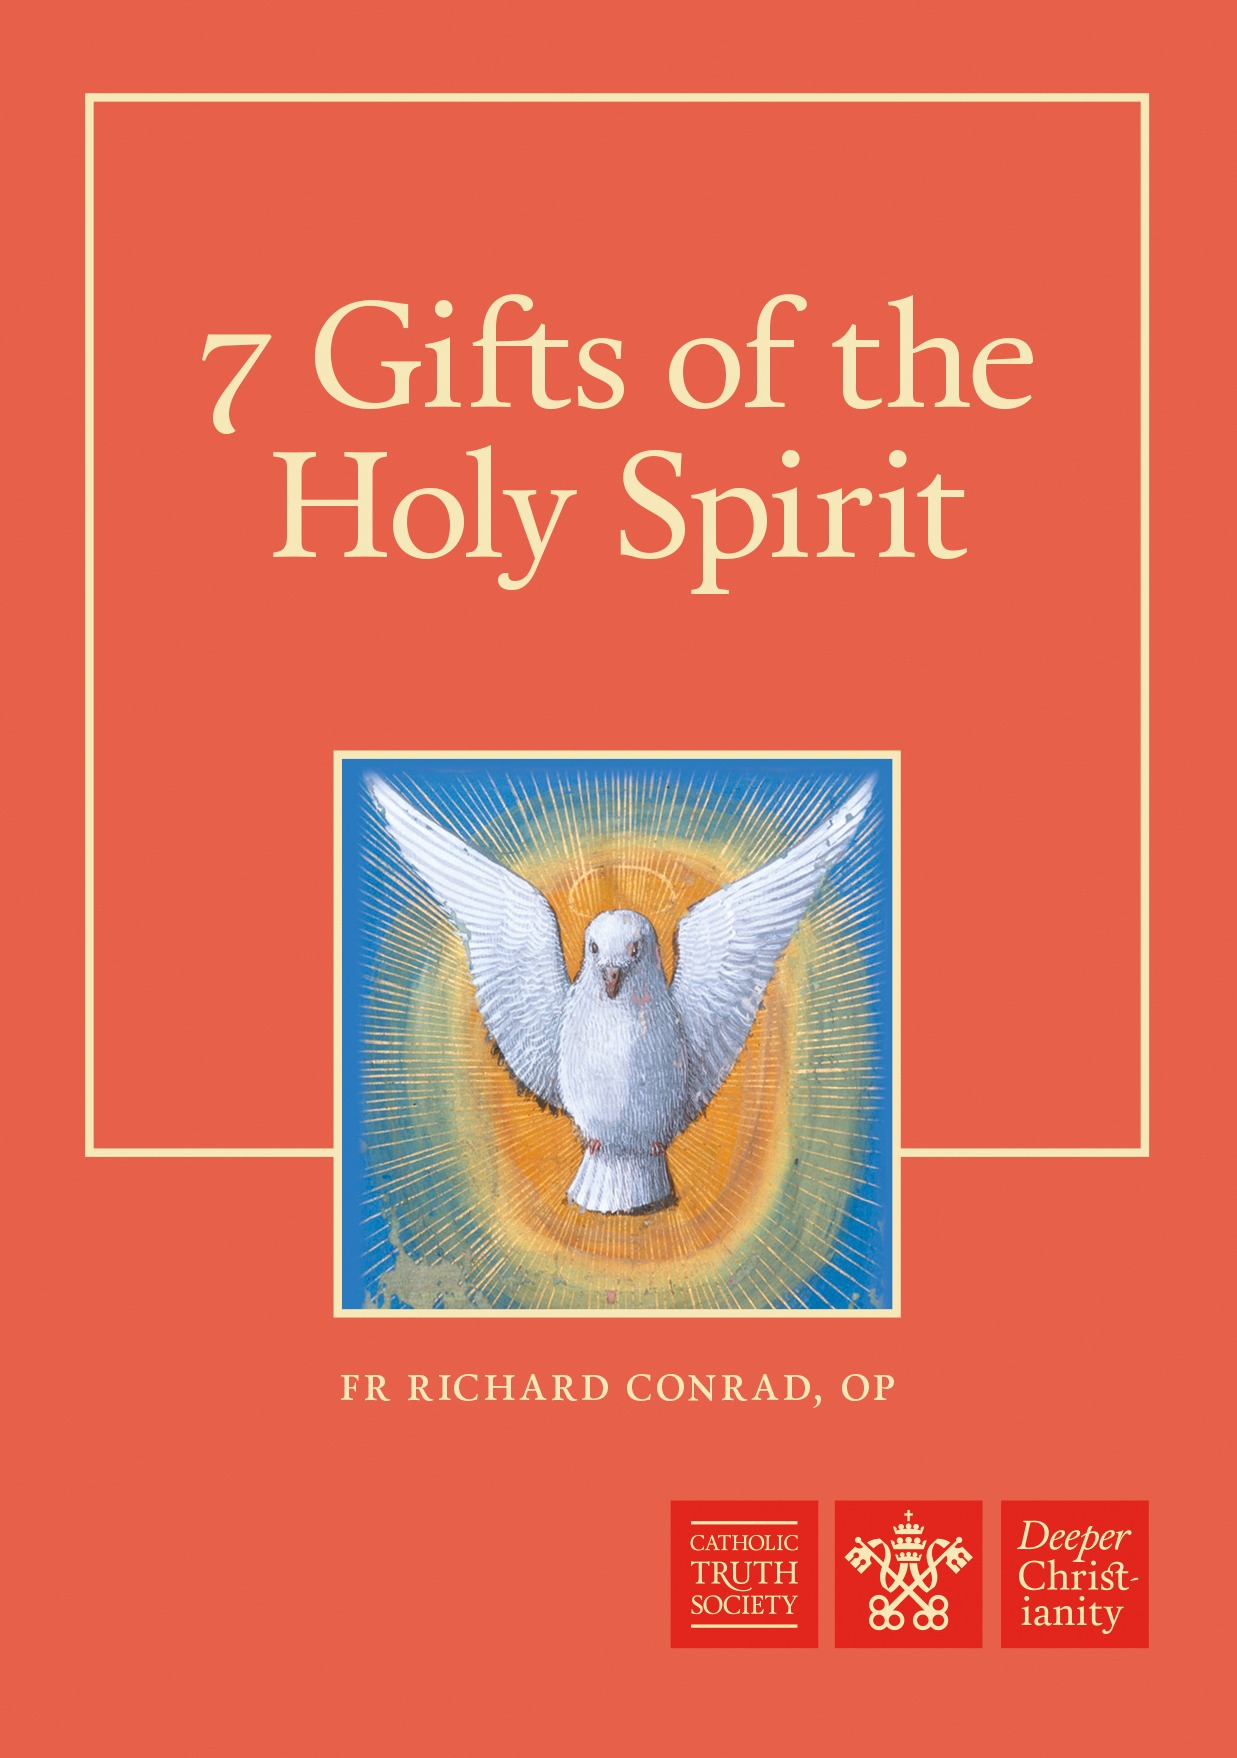 7-gifts-of-the-holy-spirit-catholic-truth-society